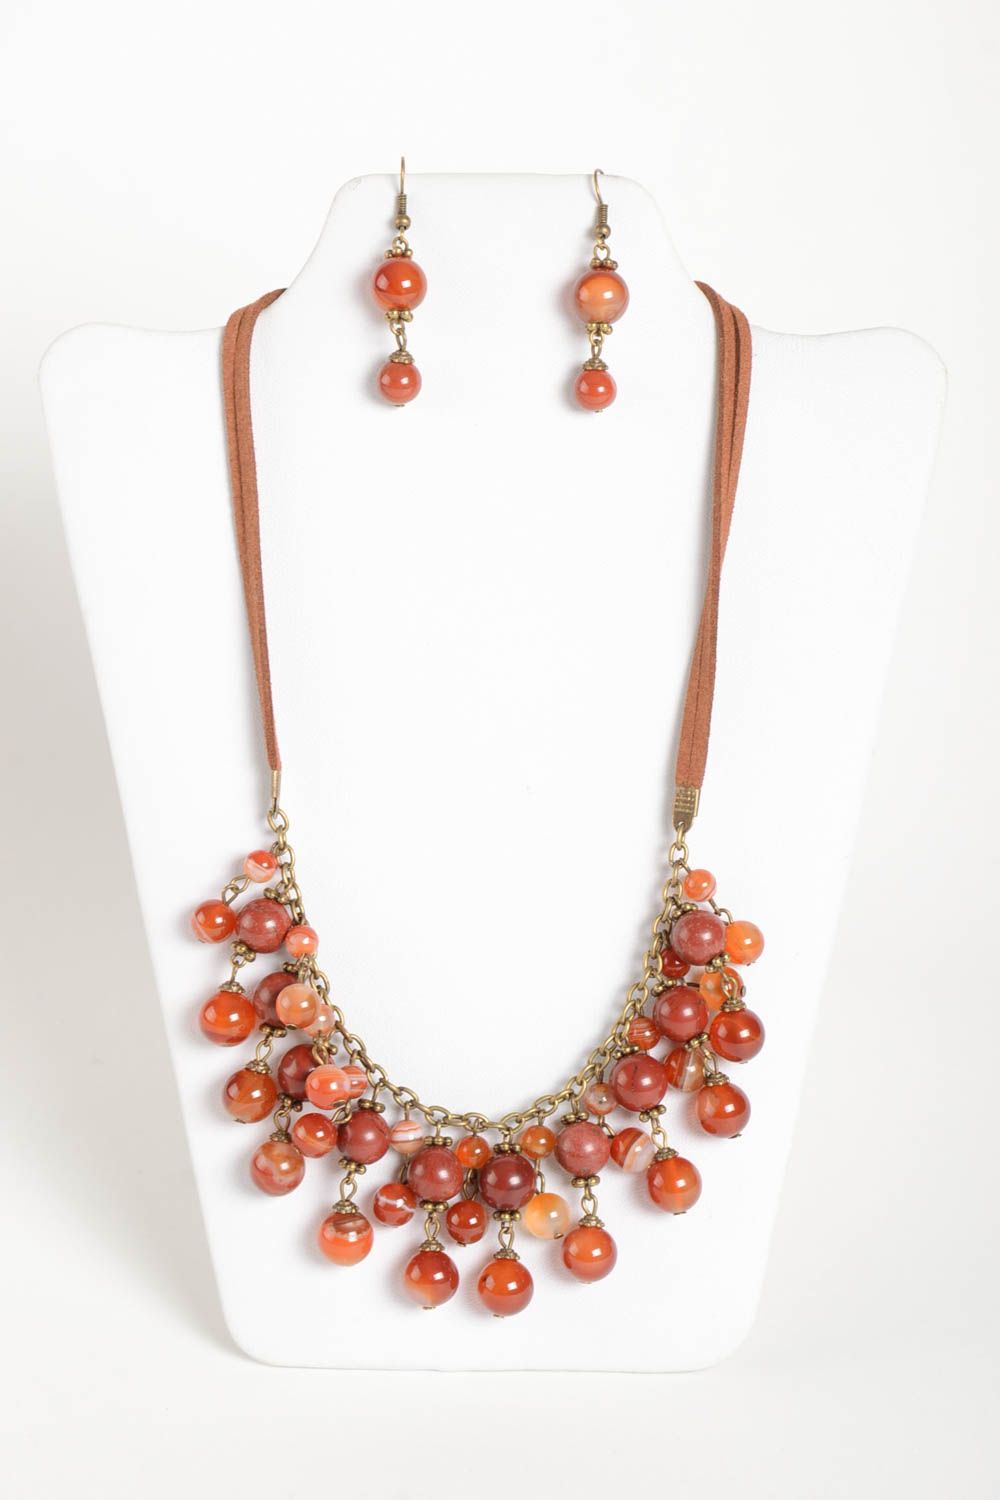 Handmade natural stone accessories elegant jewelry set designer gift for her photo 2